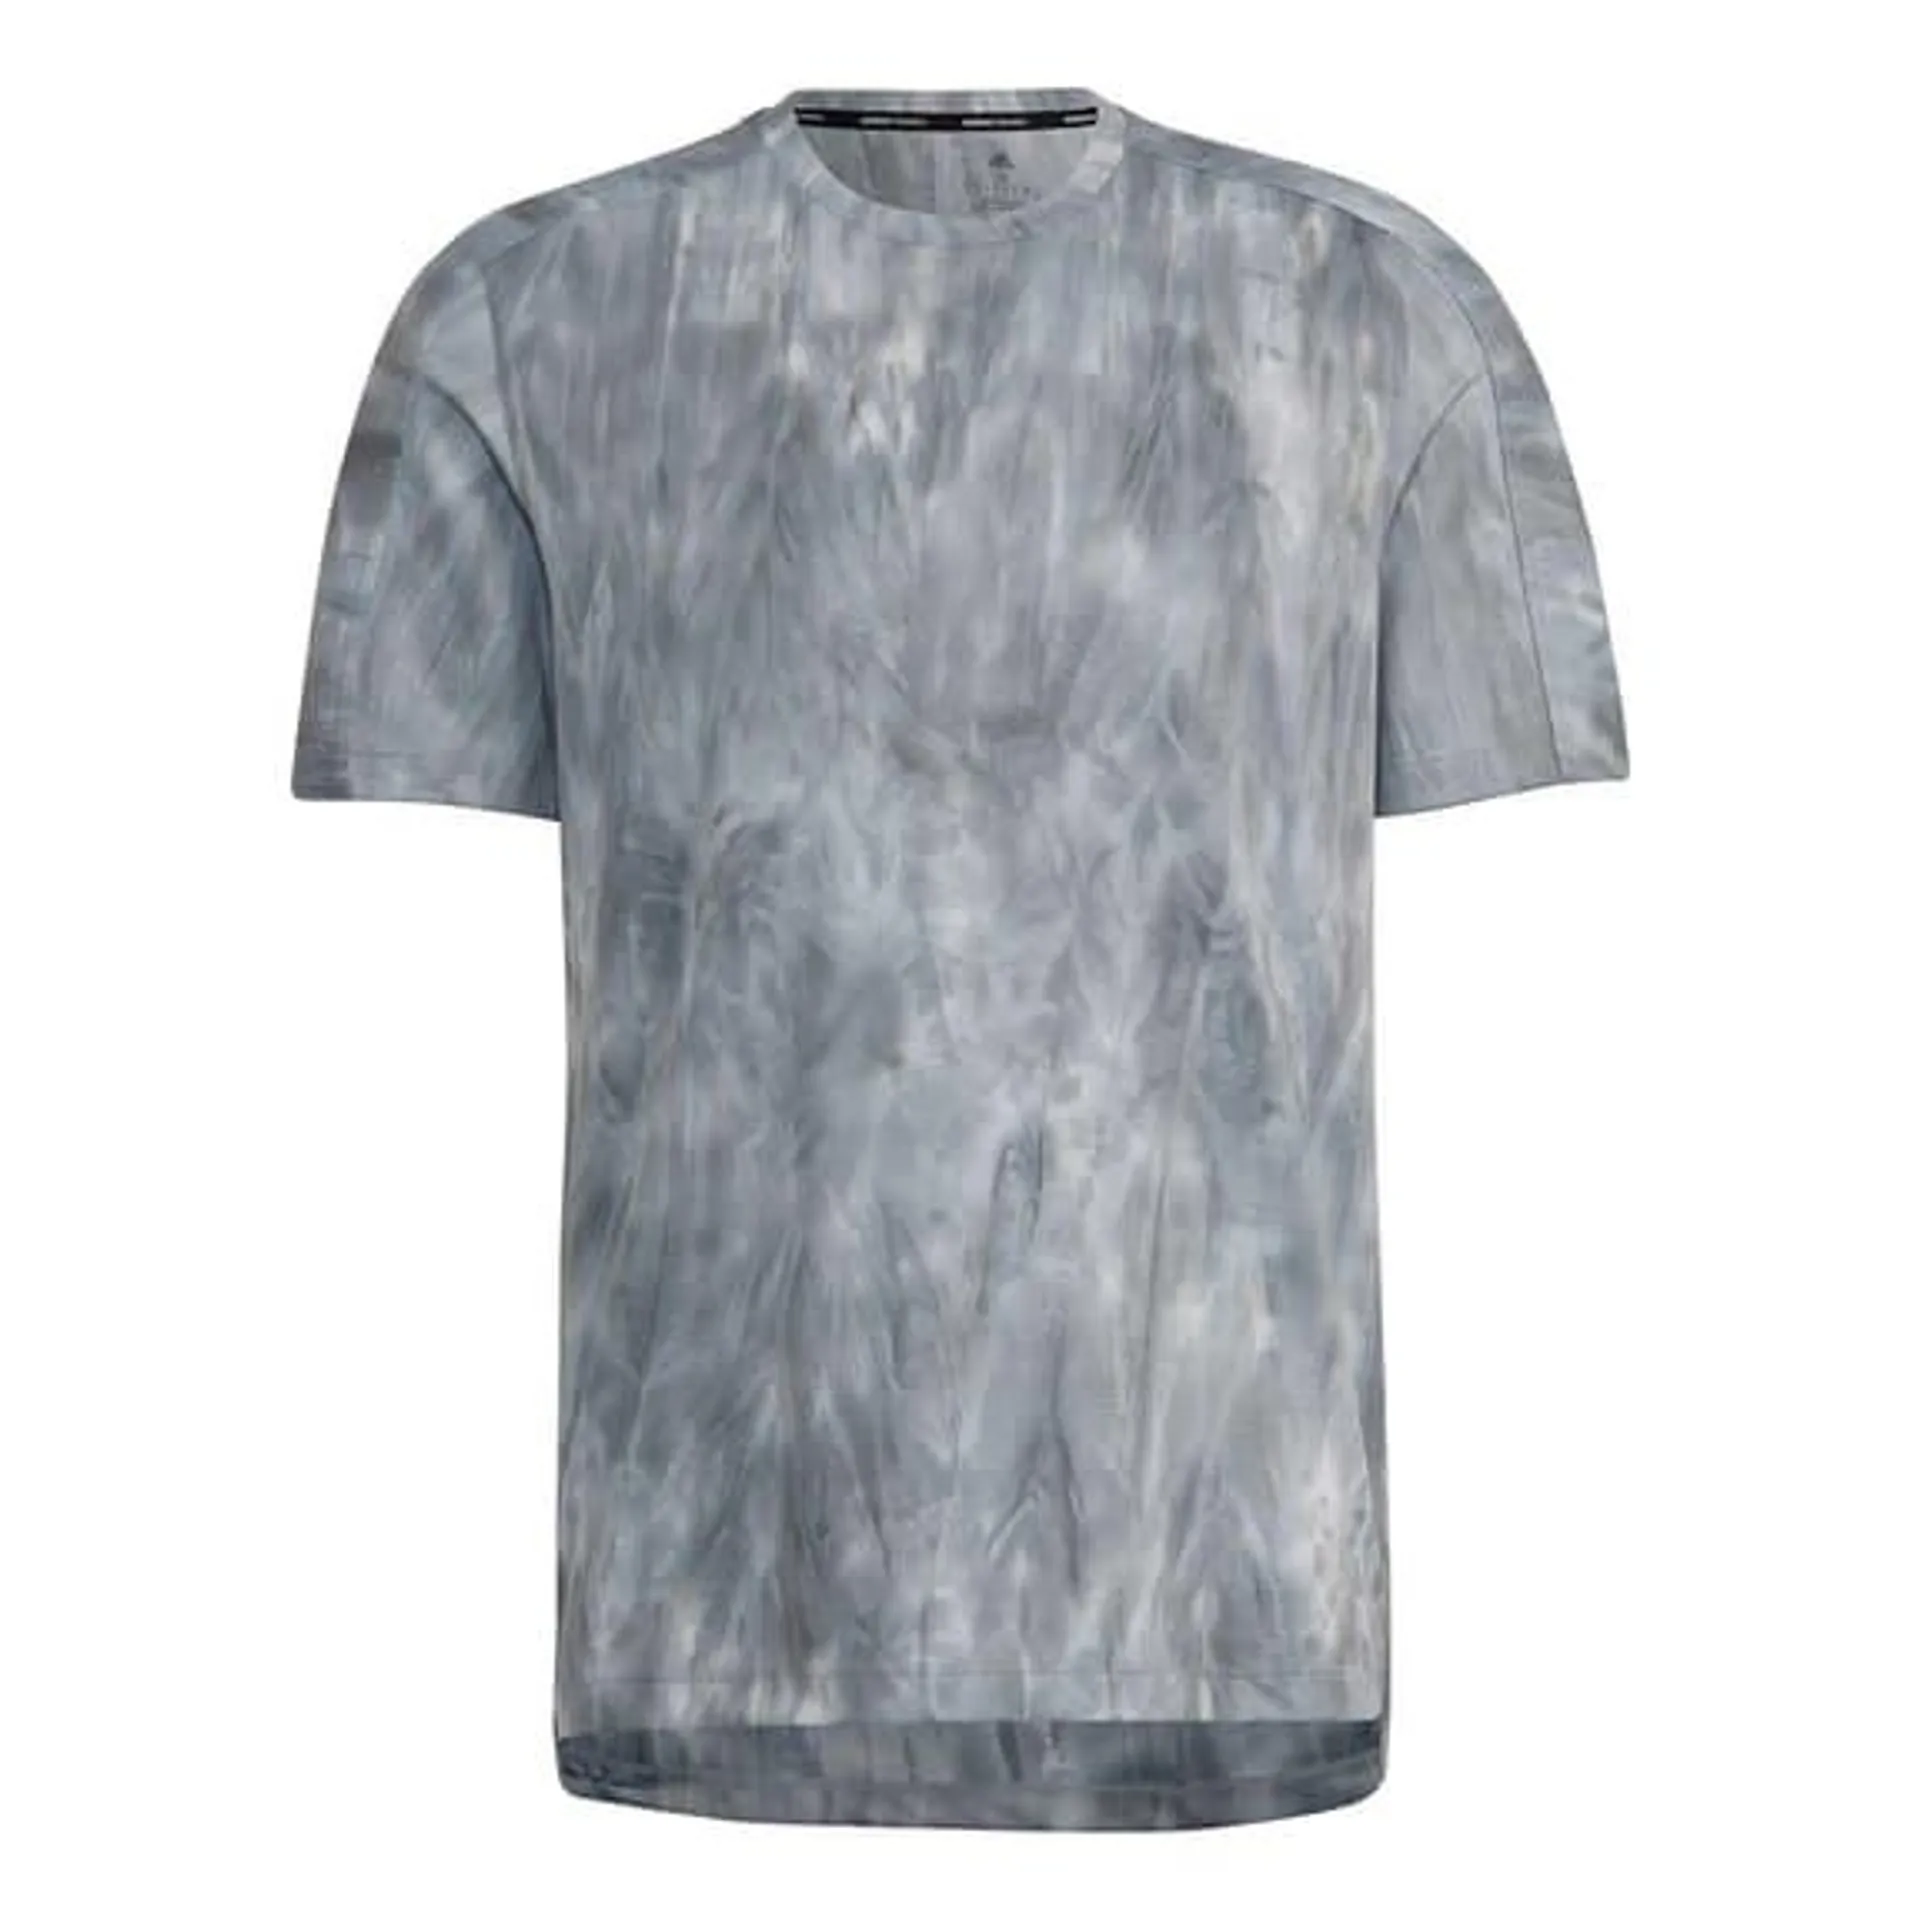 T-shirt adidas Workout Spray Dye manche courte gris